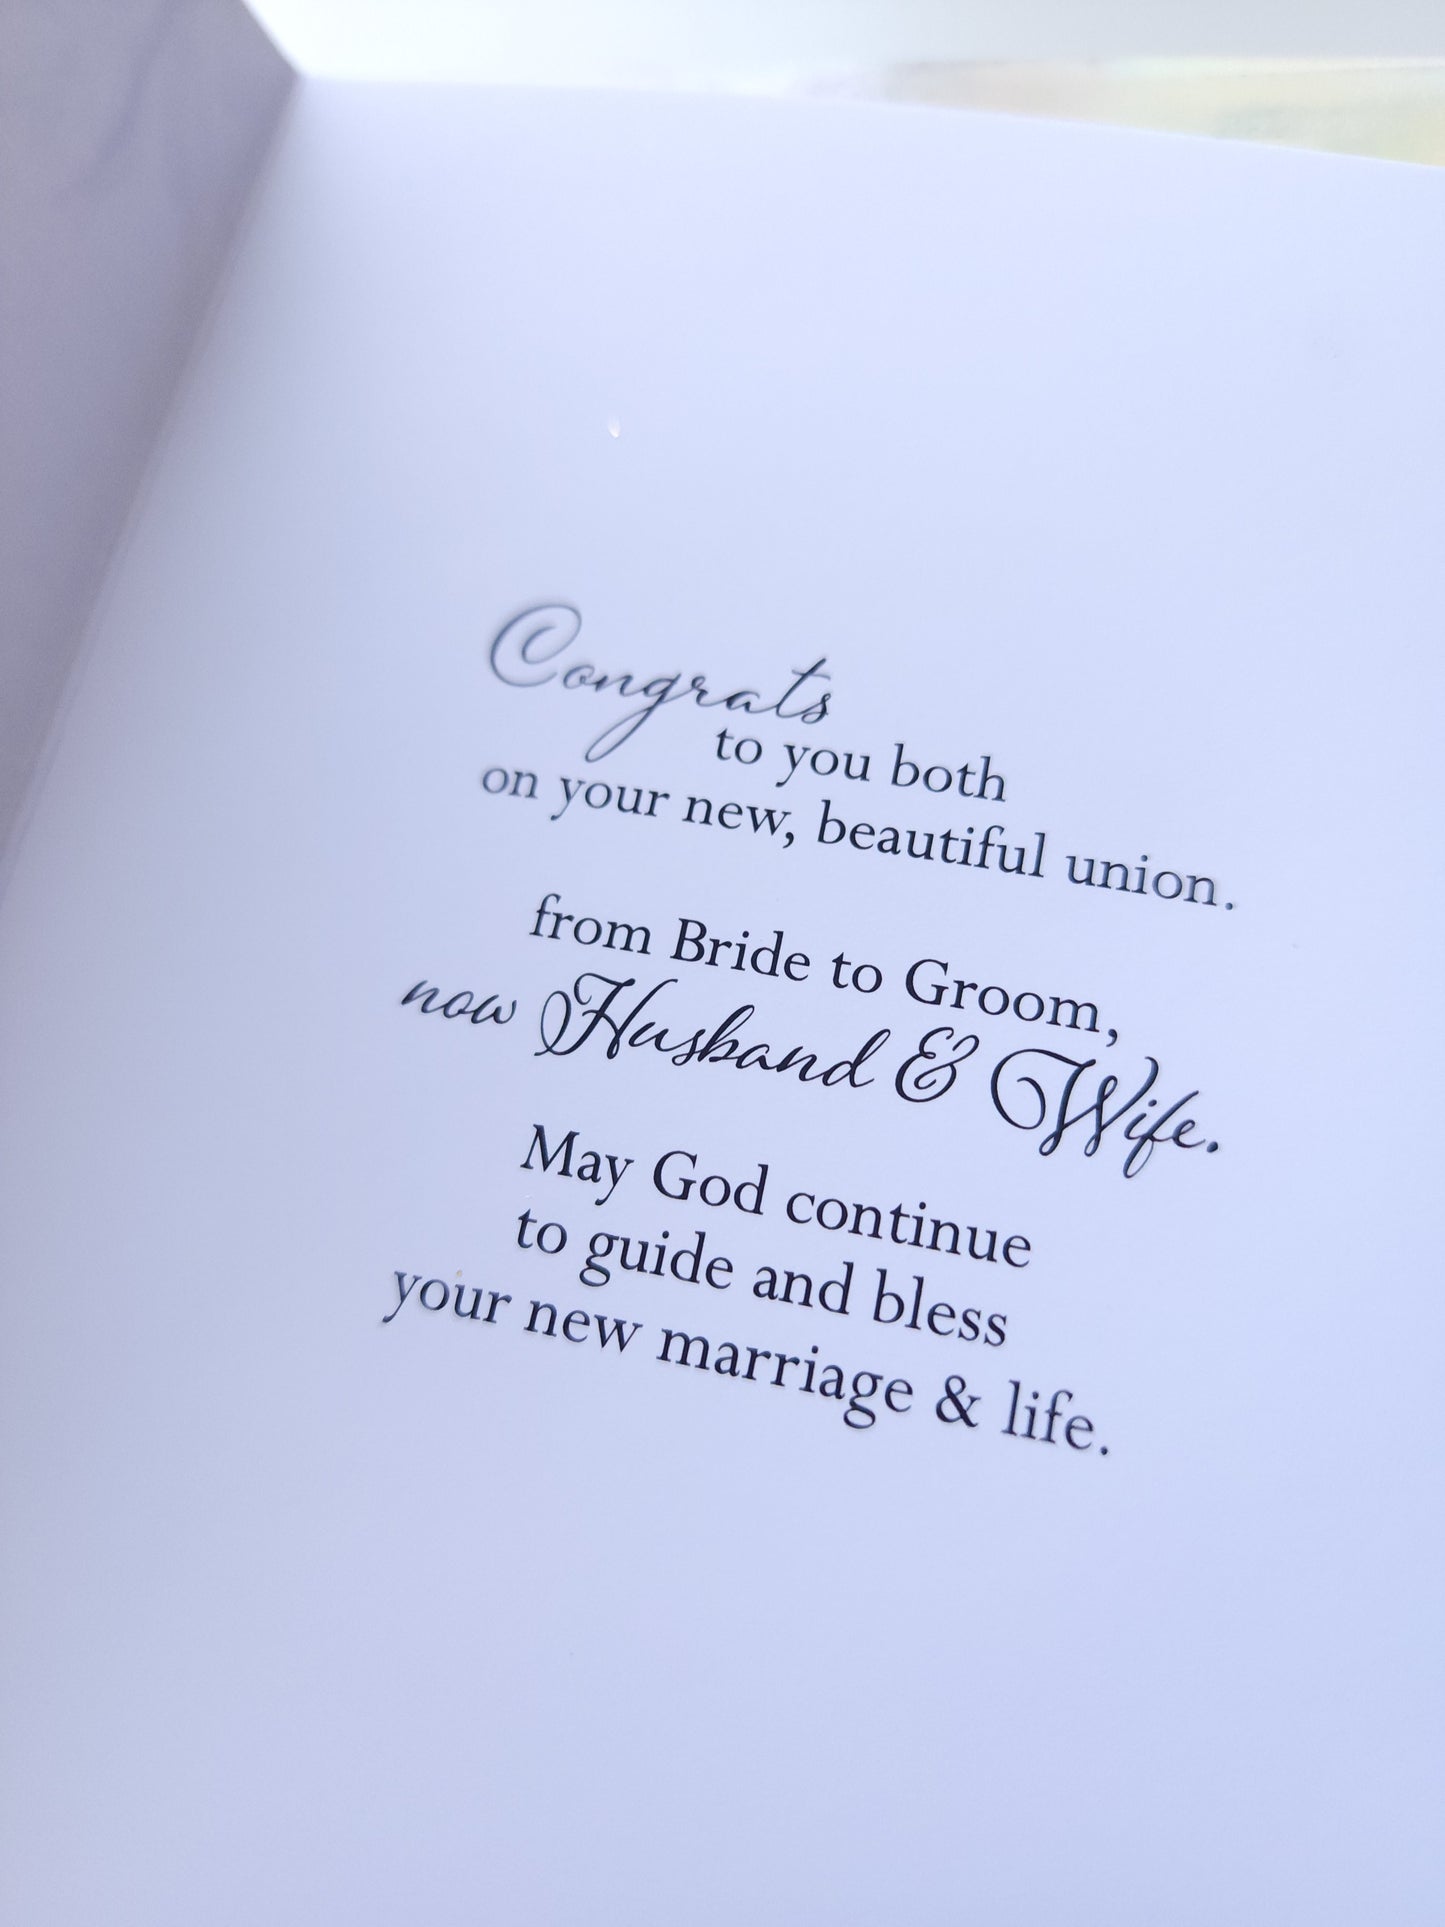 Congrats On Your New Union - Wedding Celebration Card